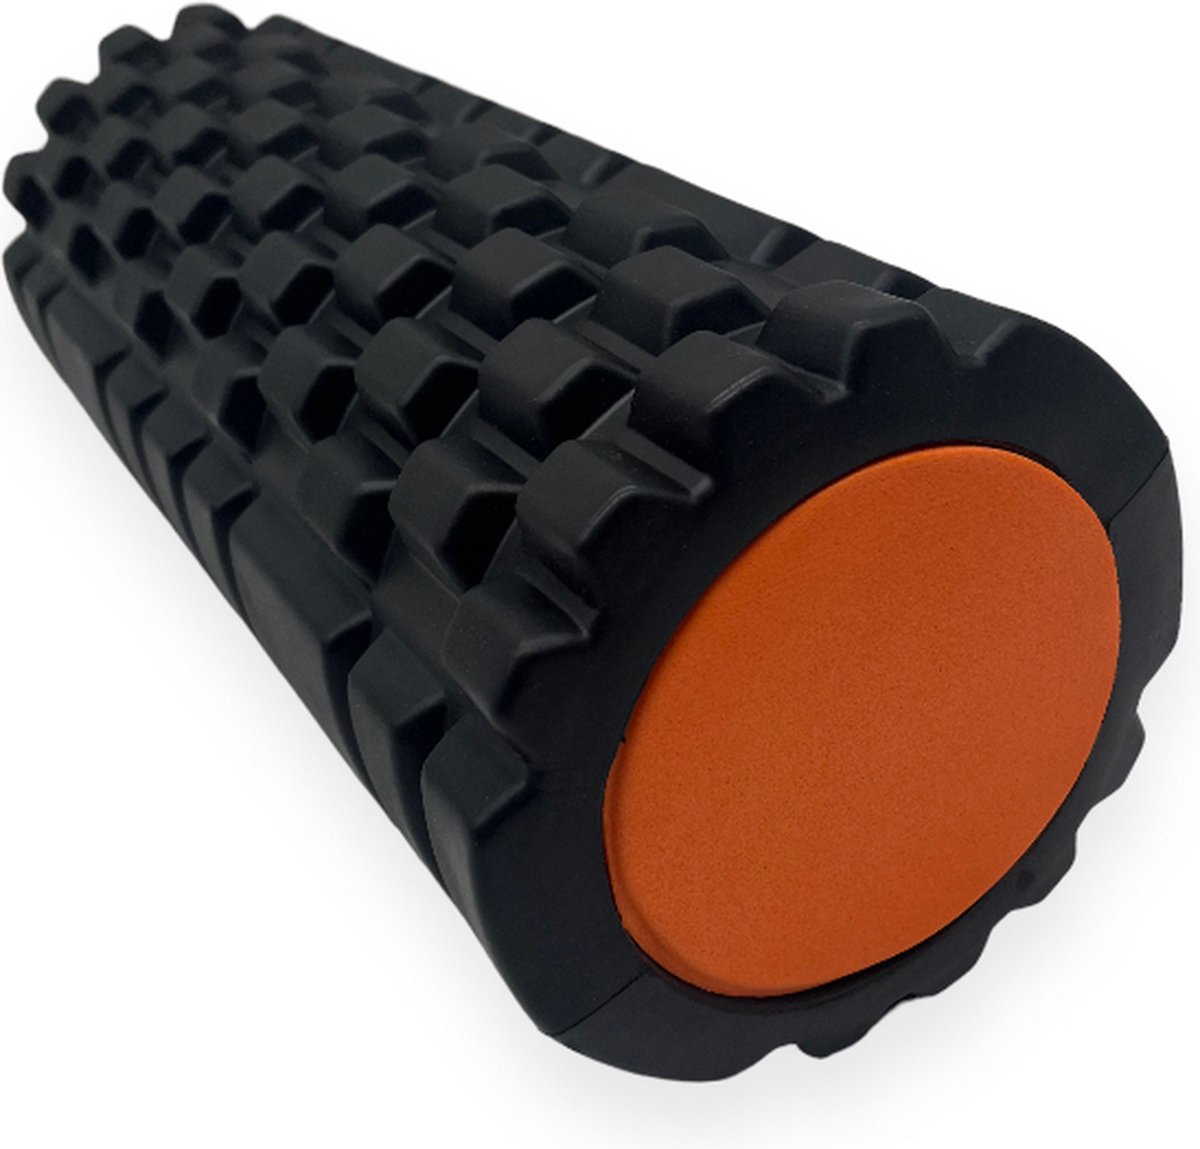 Padisport - Foamroller 2 in 1 - zwart - foamroller set - foamrollers - foamroller trigger point - foamroller rug